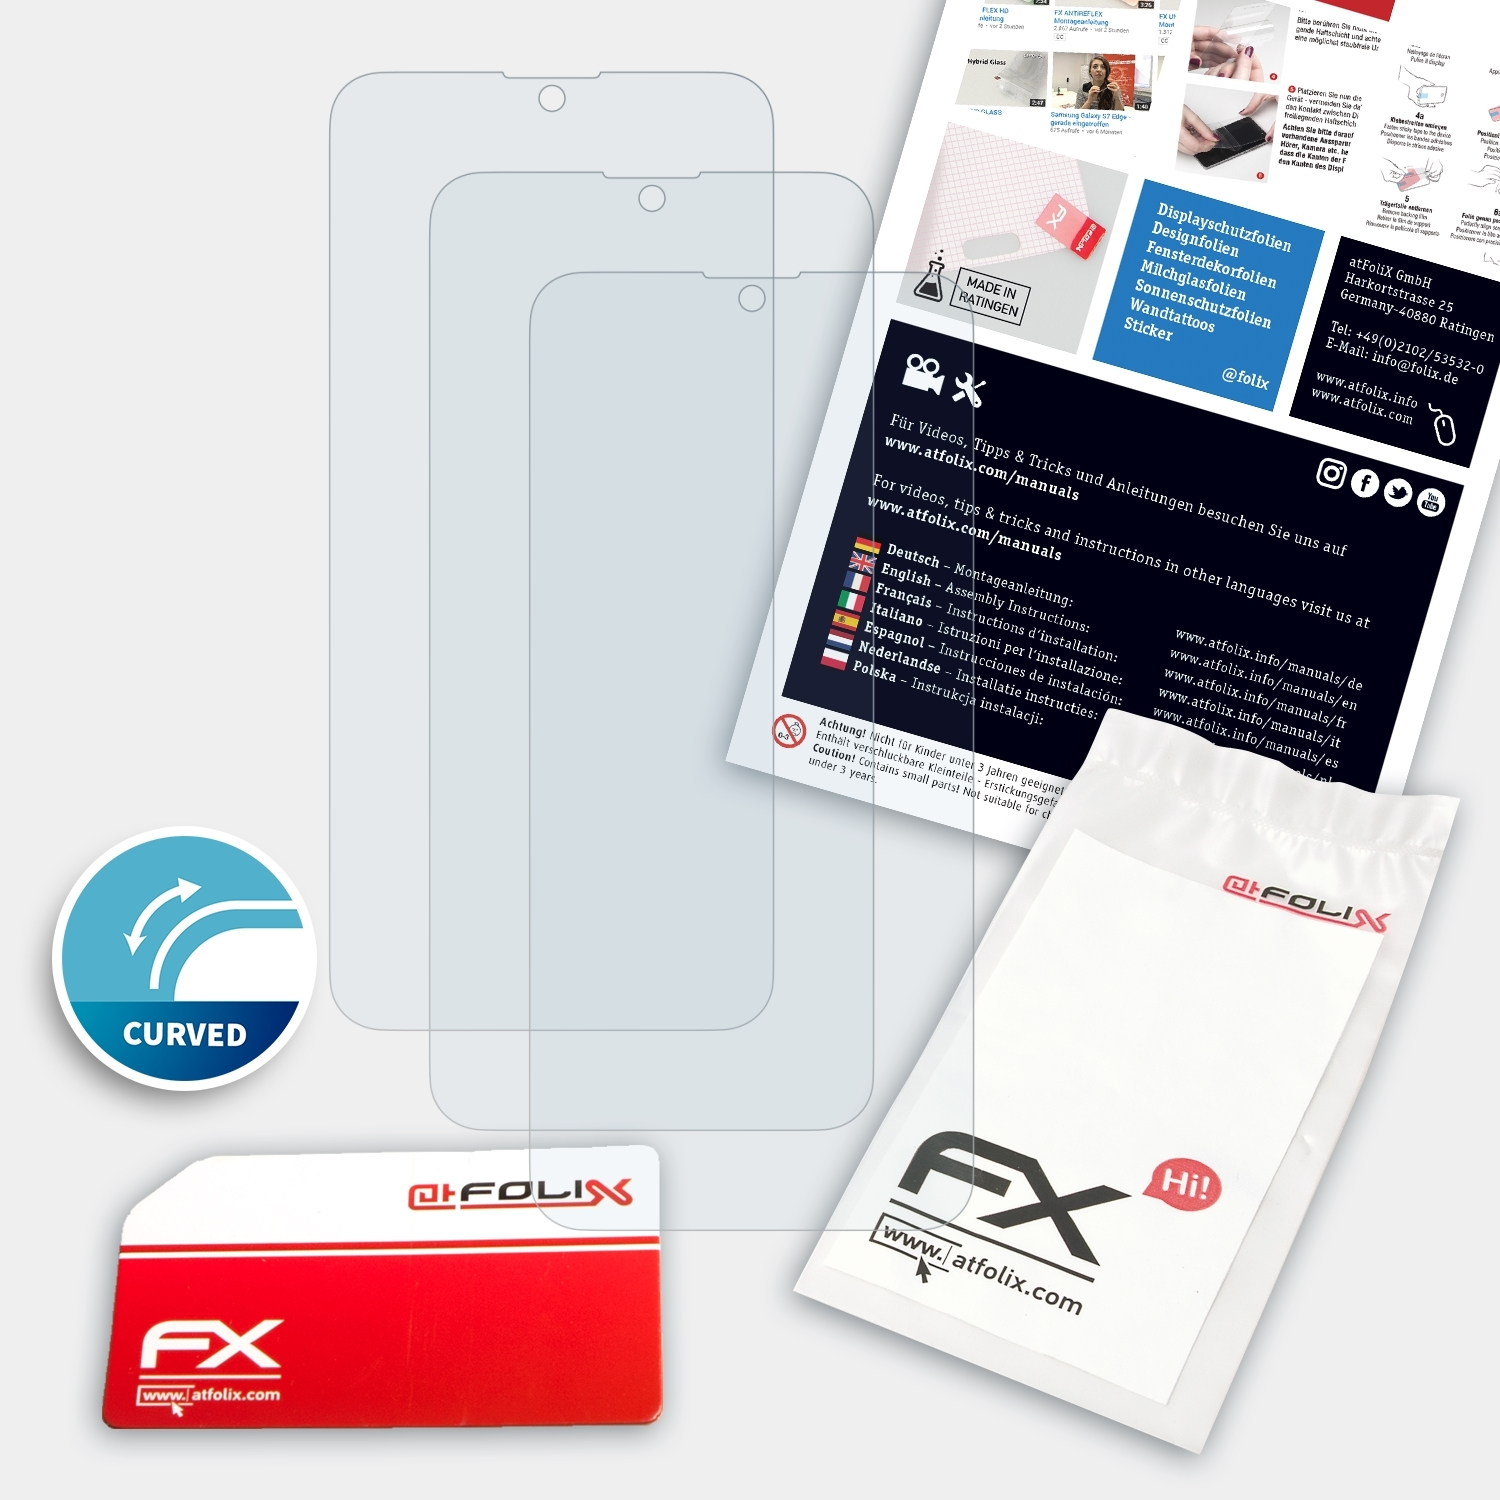 ATFOLIX 3x FX-ActiFleX Displayschutz(für Q60) LG